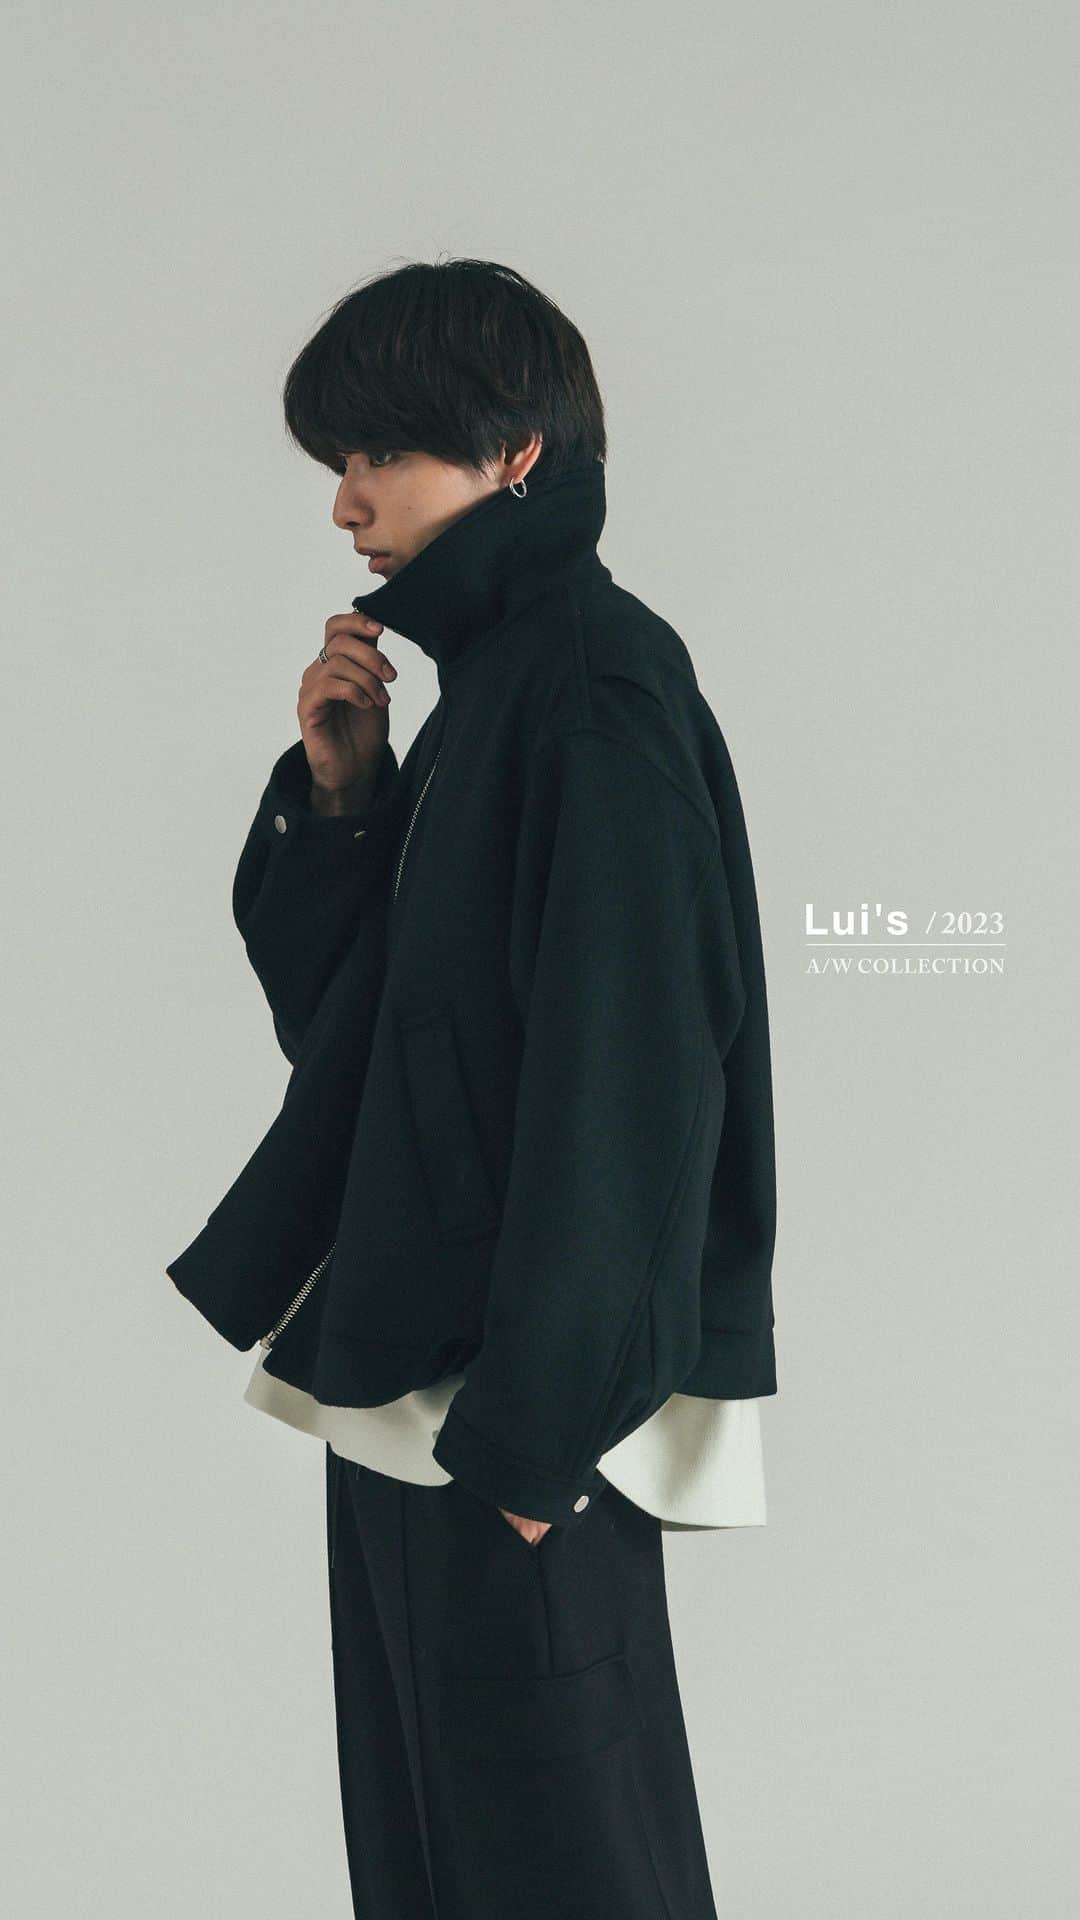 Lui's Lui's official instagramのインスタグラム